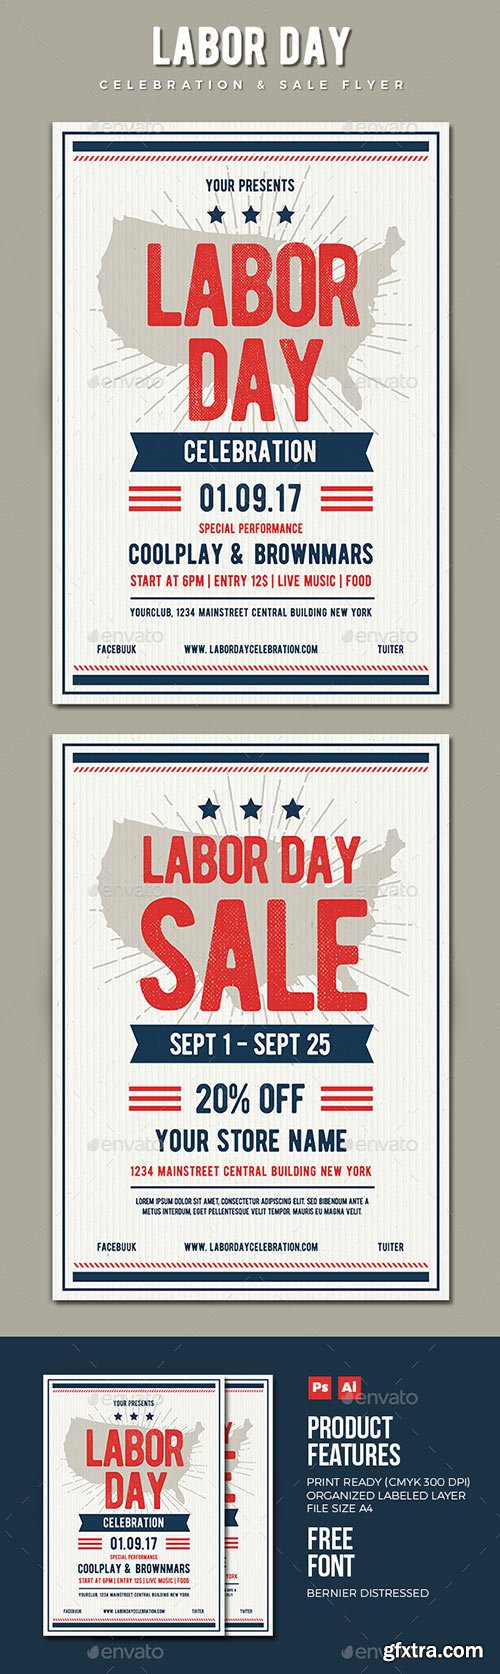 Graphicriver - Labor Day Flyer 17625345